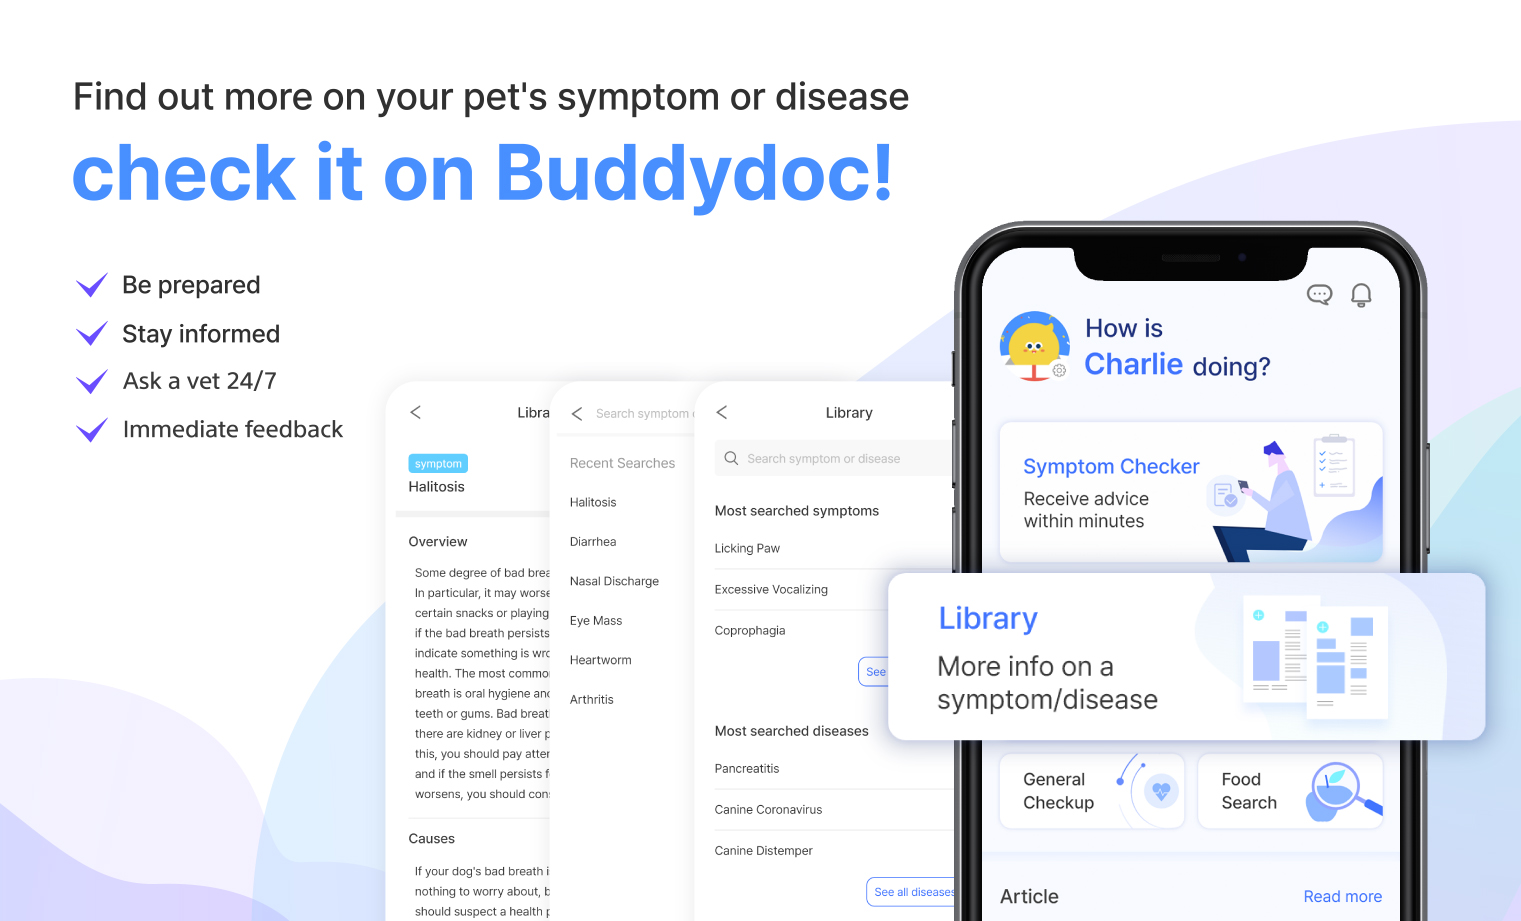 Buddydoc library information